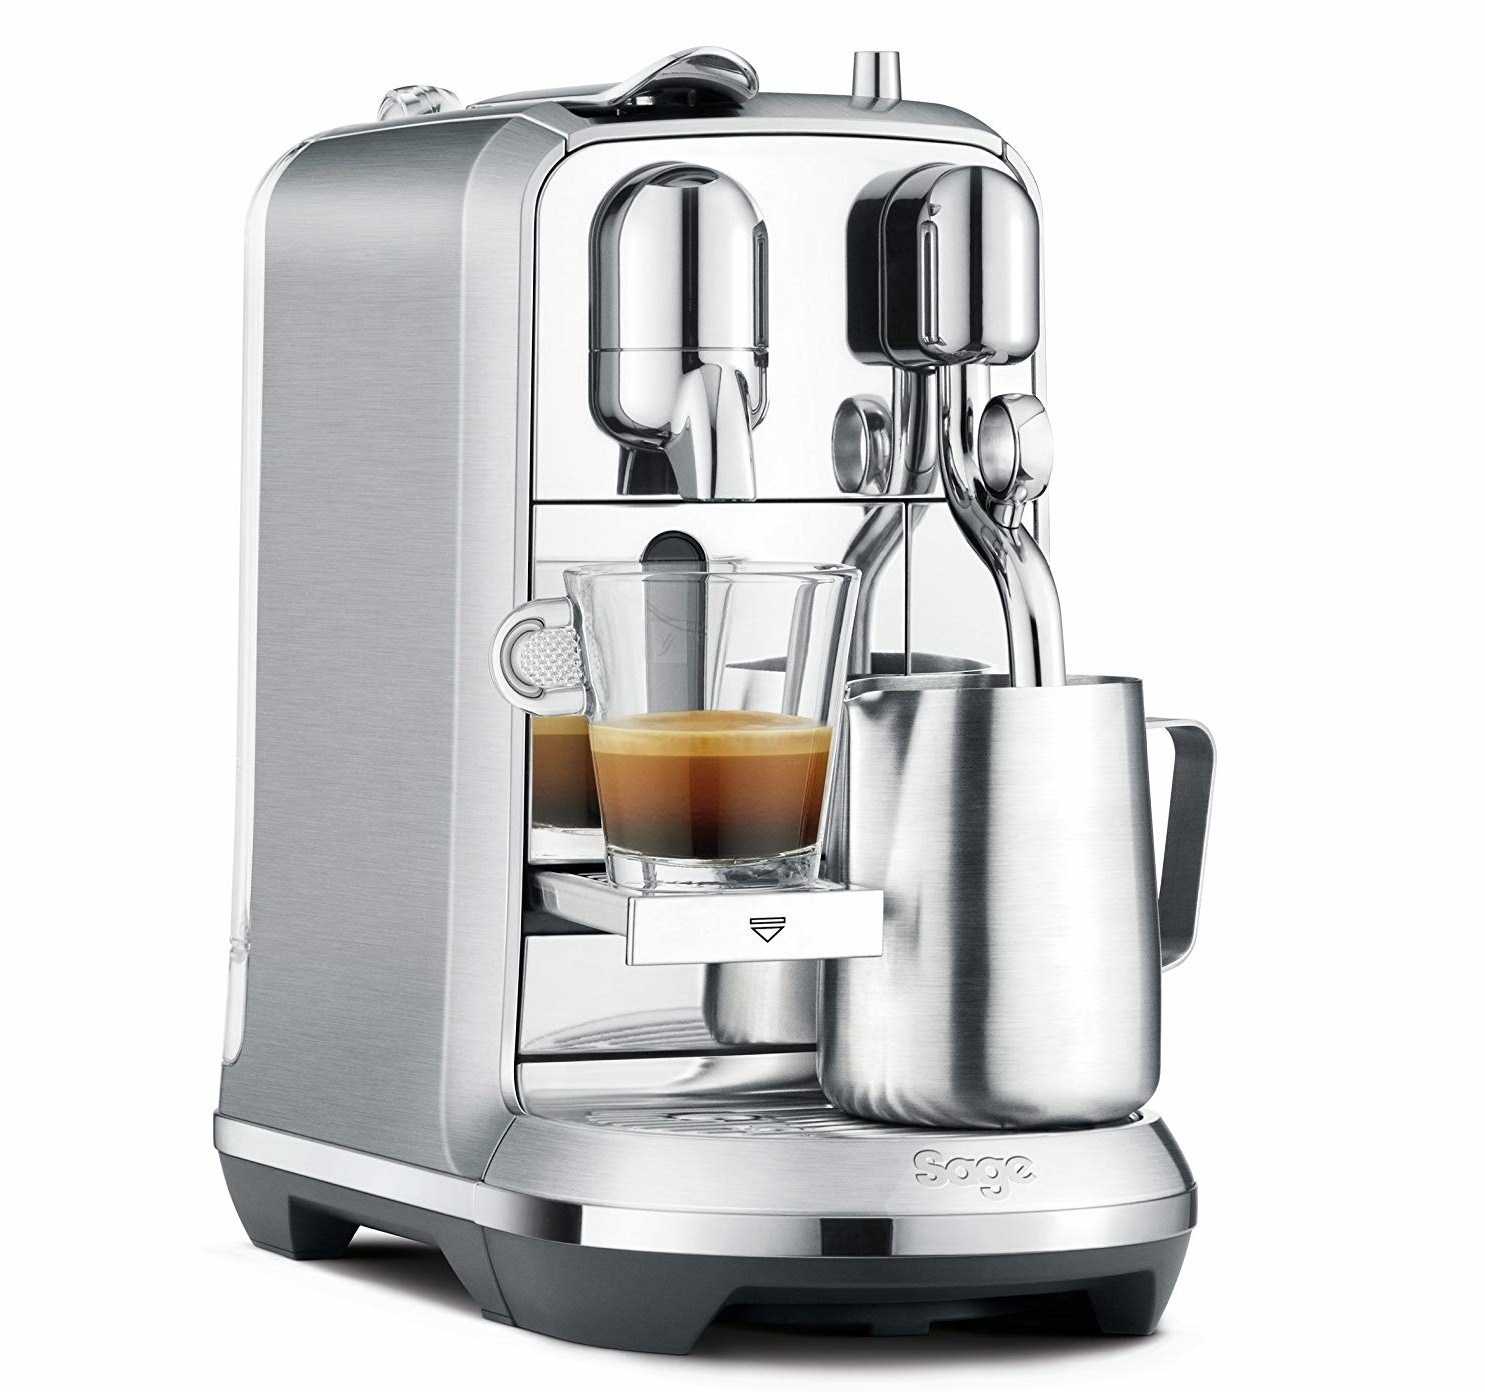 Nespresso Creatista Plus Espresso Concept Coffee Machine - Display Unit